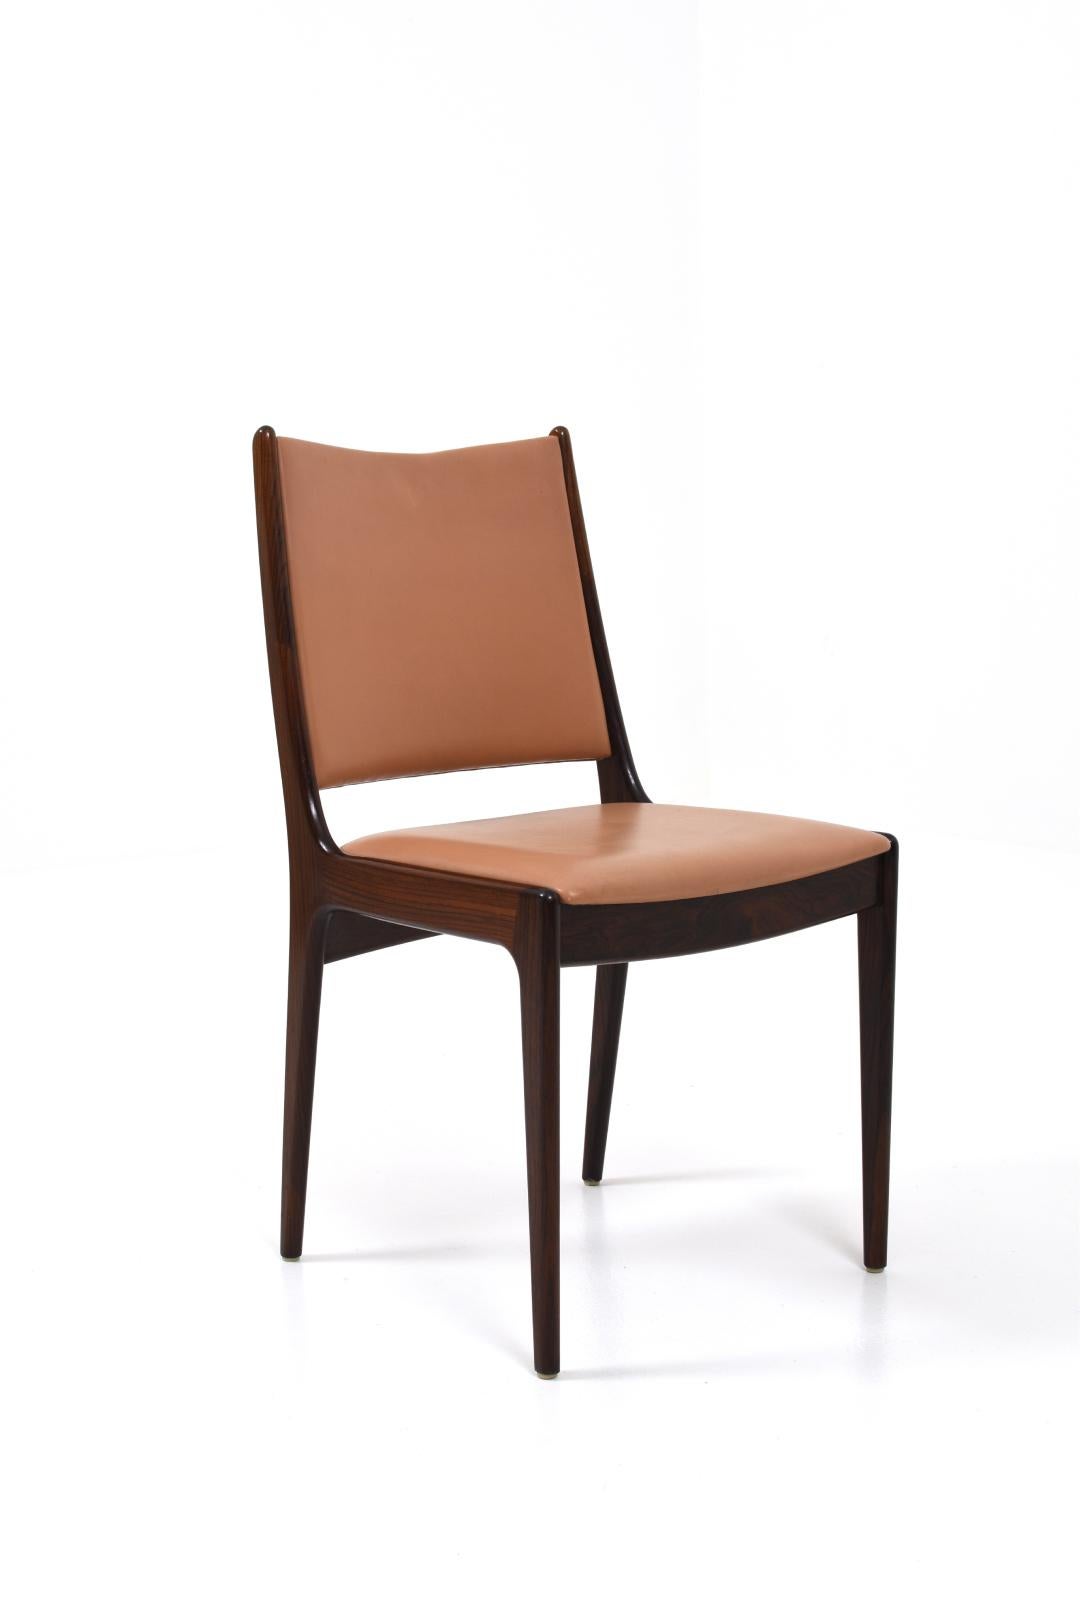 Mid-20th Century Dining Chairs by Johannes Andersen for Uldum Møbelfabrik 1960s